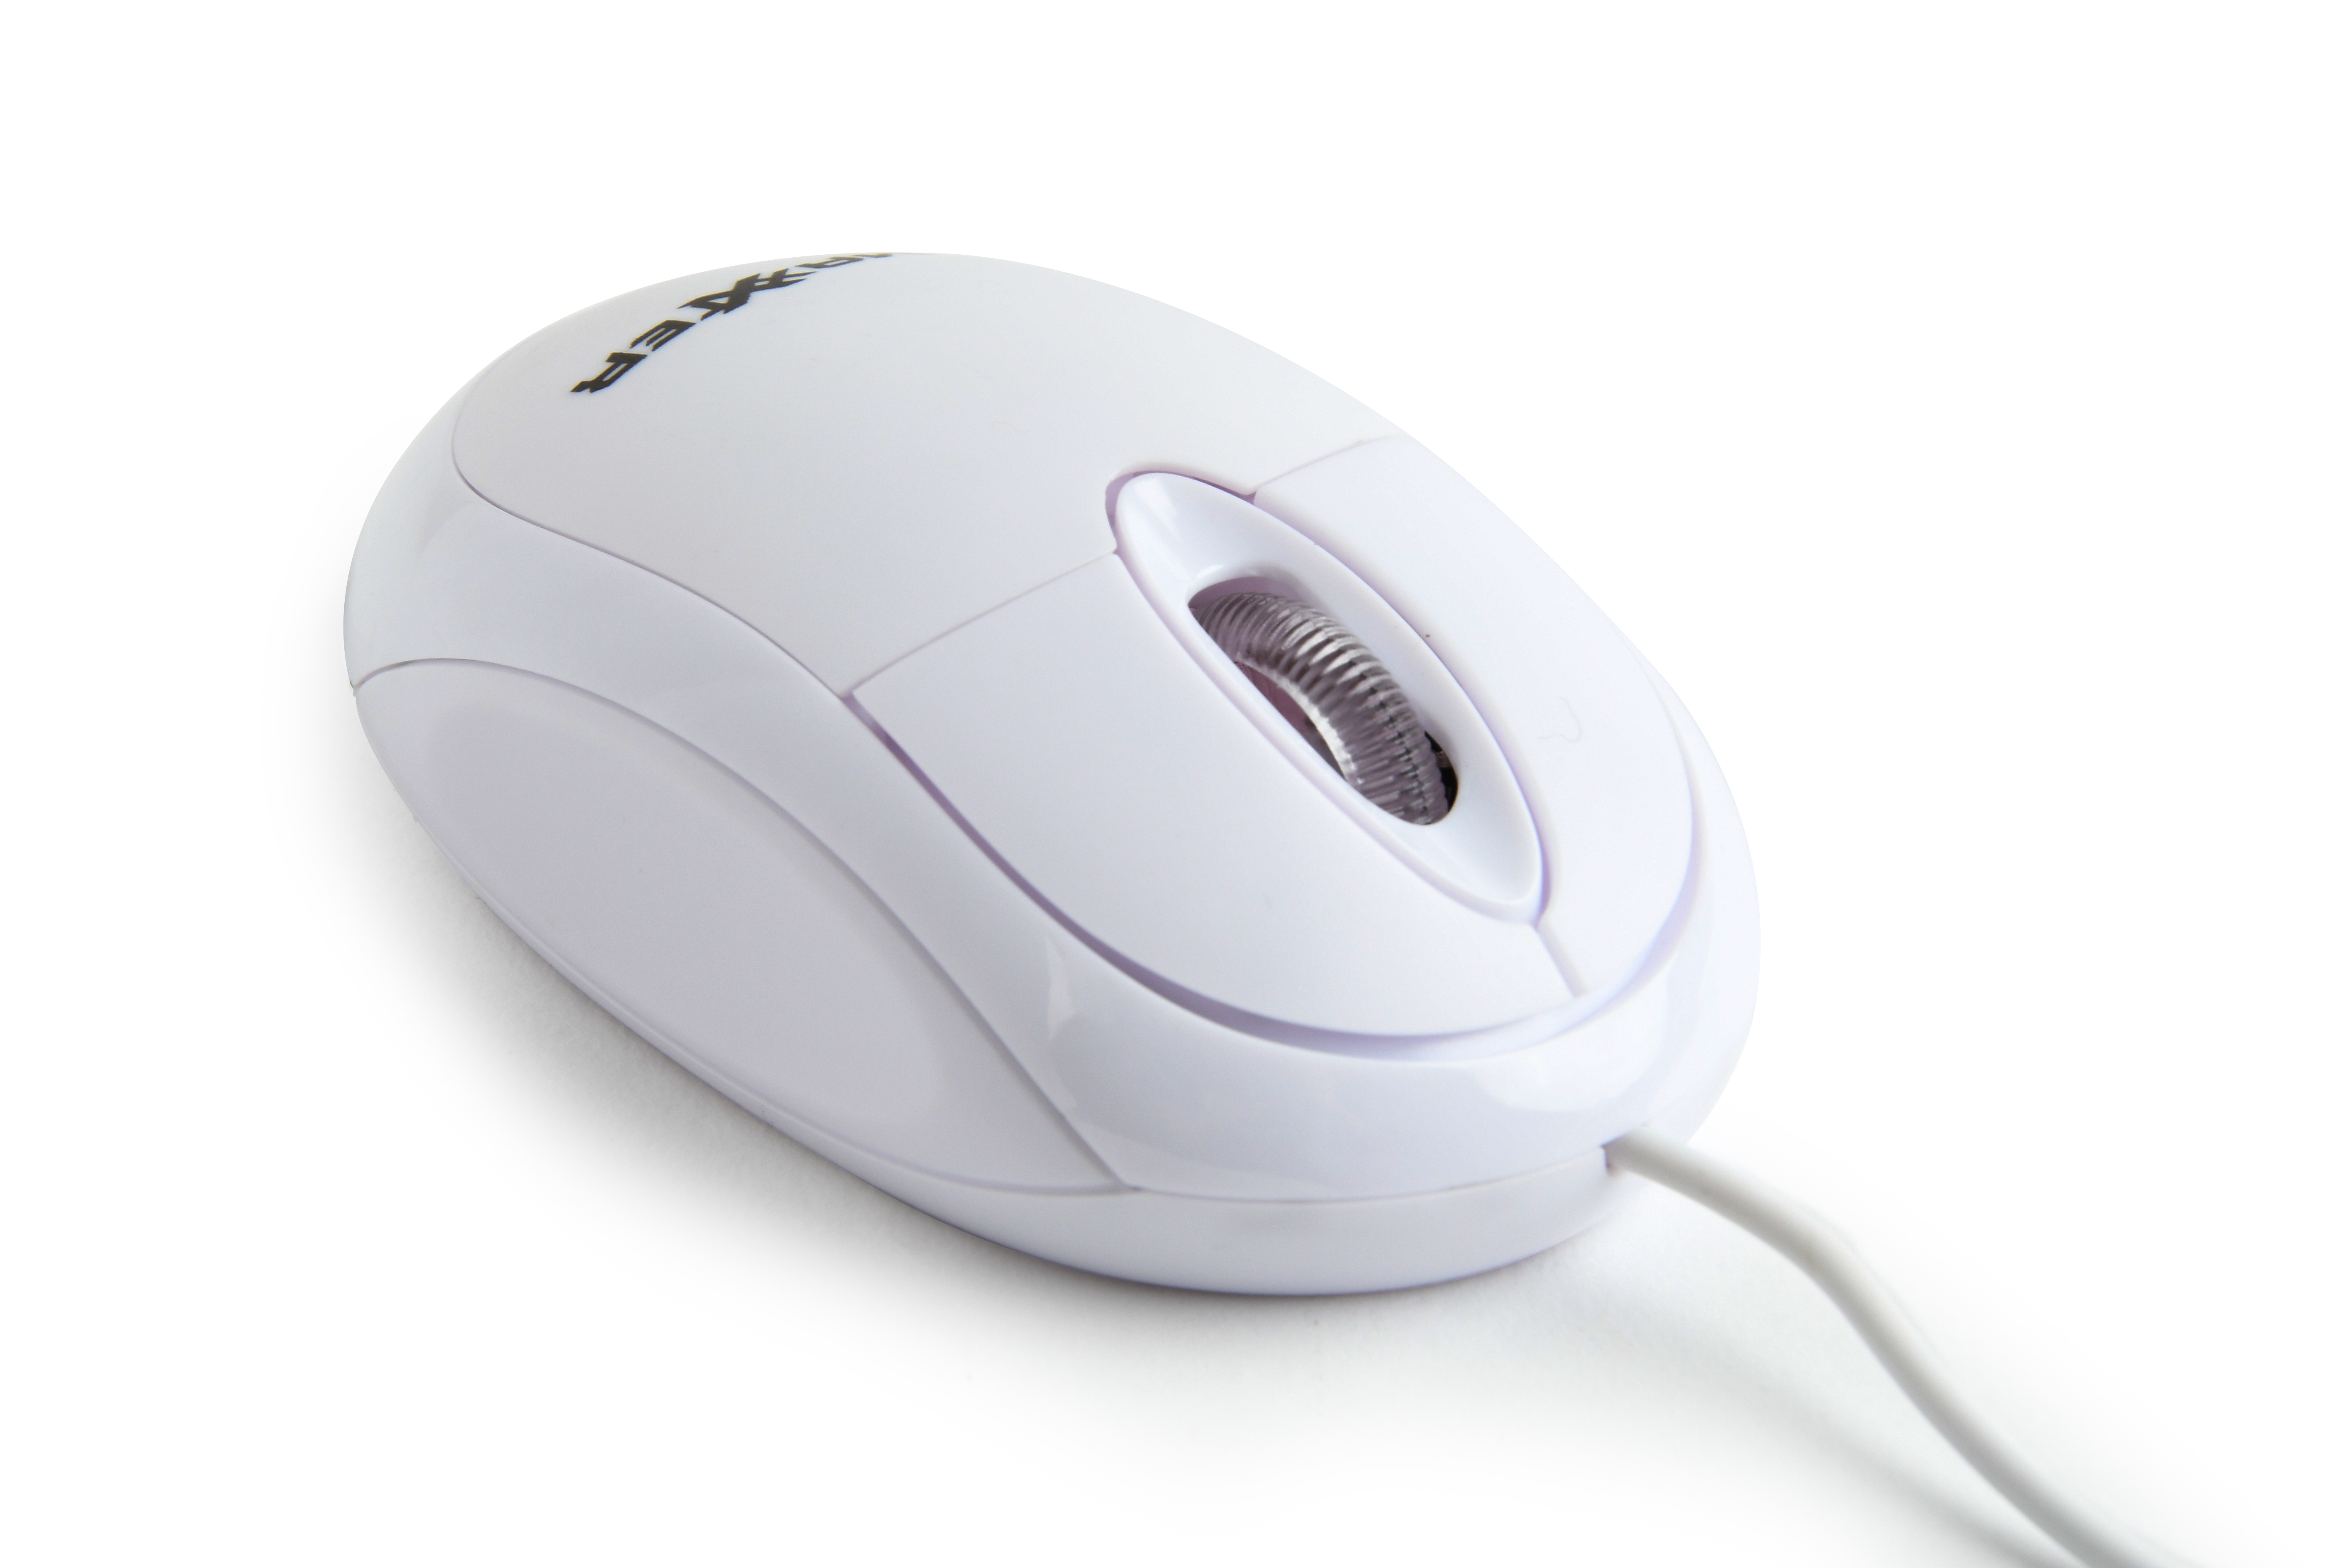 Optical USB mouse, Maxxter brand (ACT-MUS-U-02)